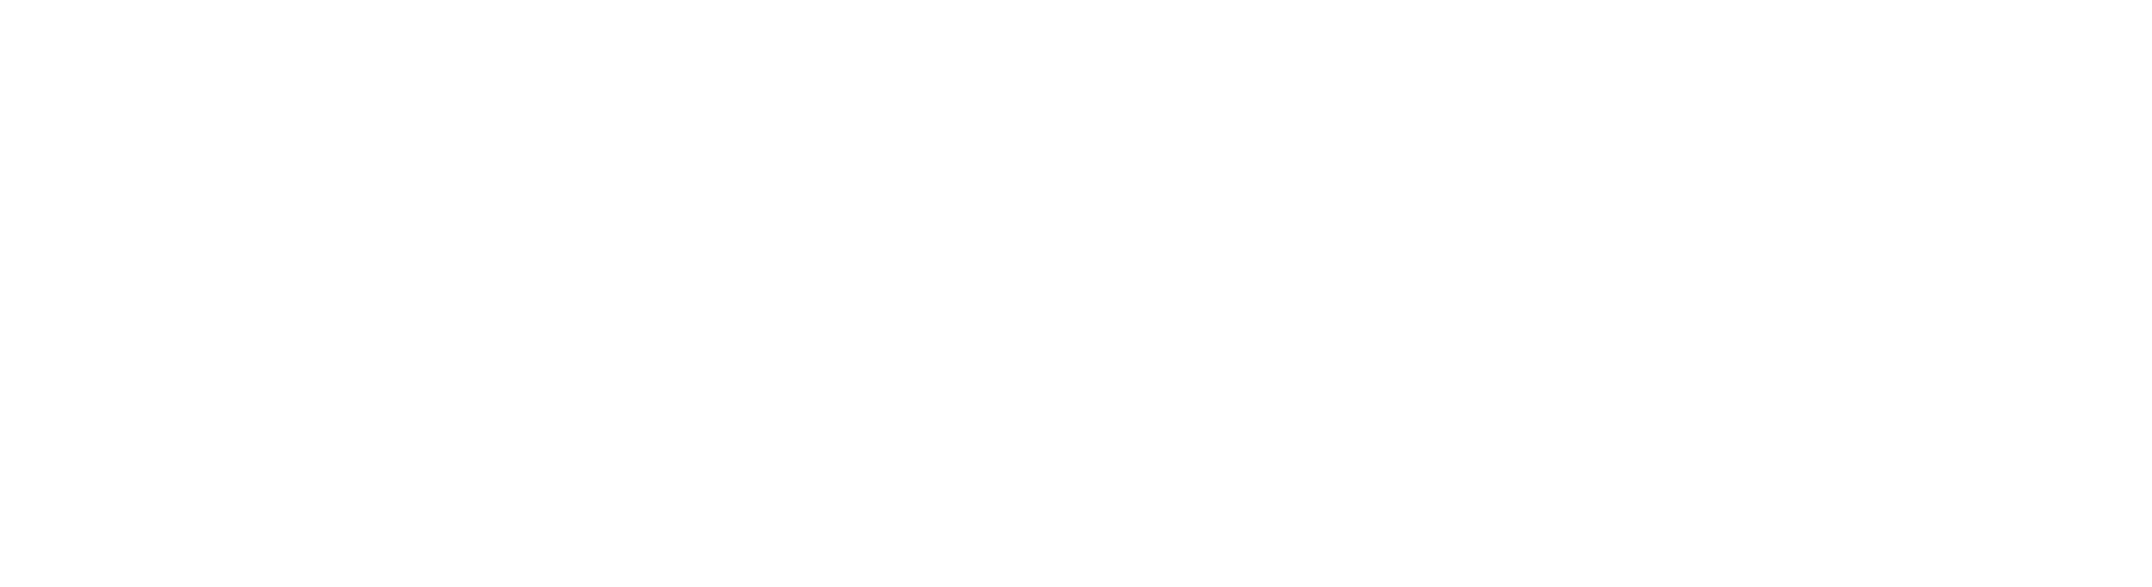 edoc logo weiss-1